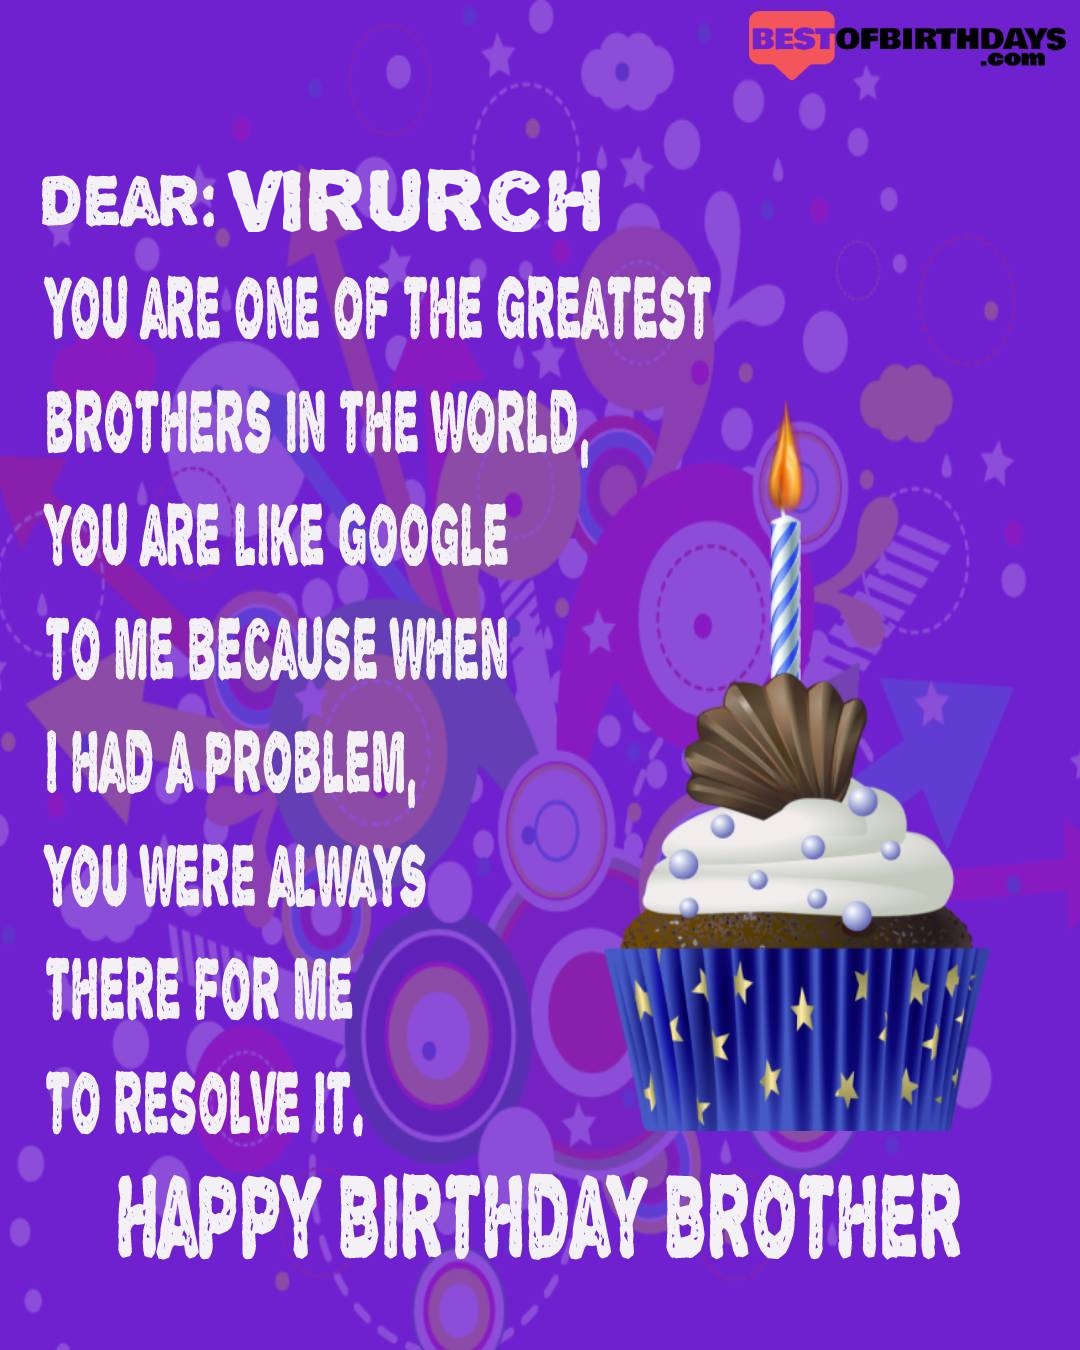 Happy birthday virurch bhai brother bro